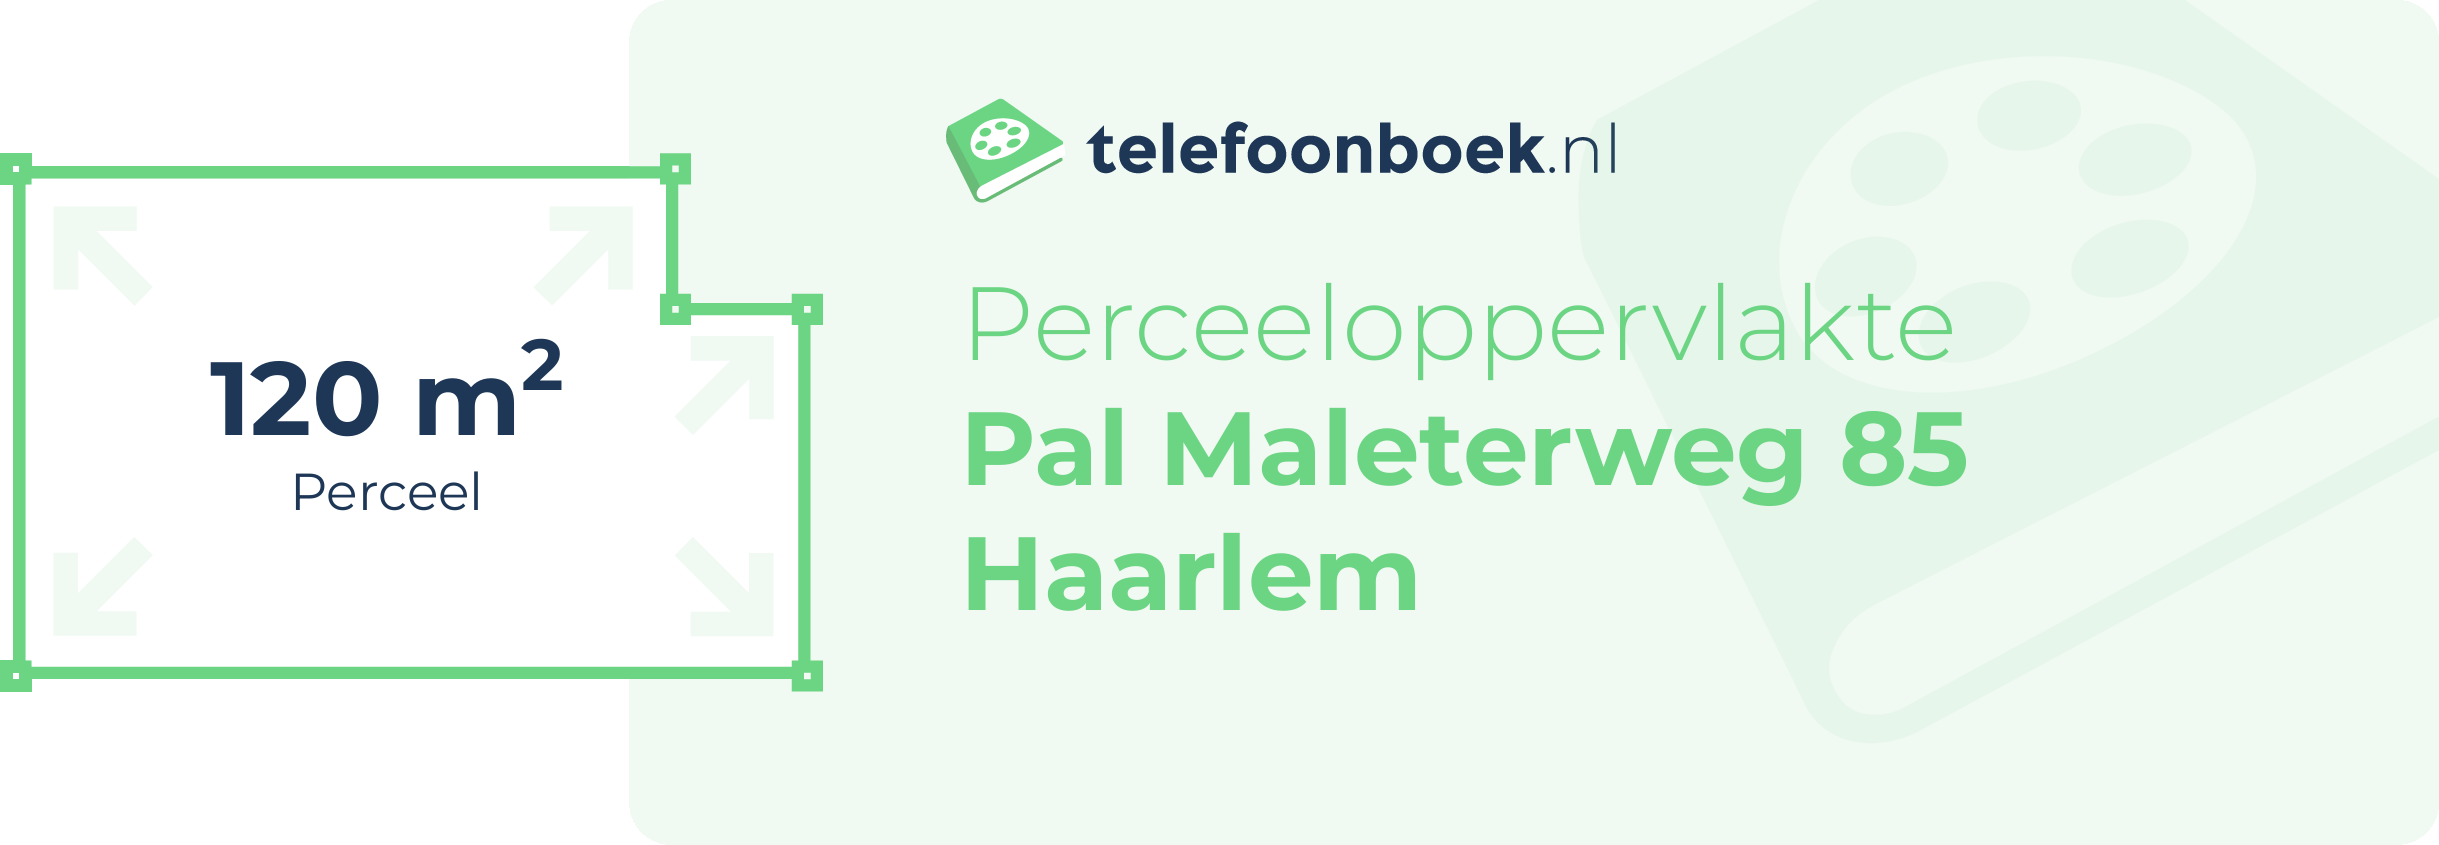 Perceeloppervlakte Pal Maleterweg 85 Haarlem